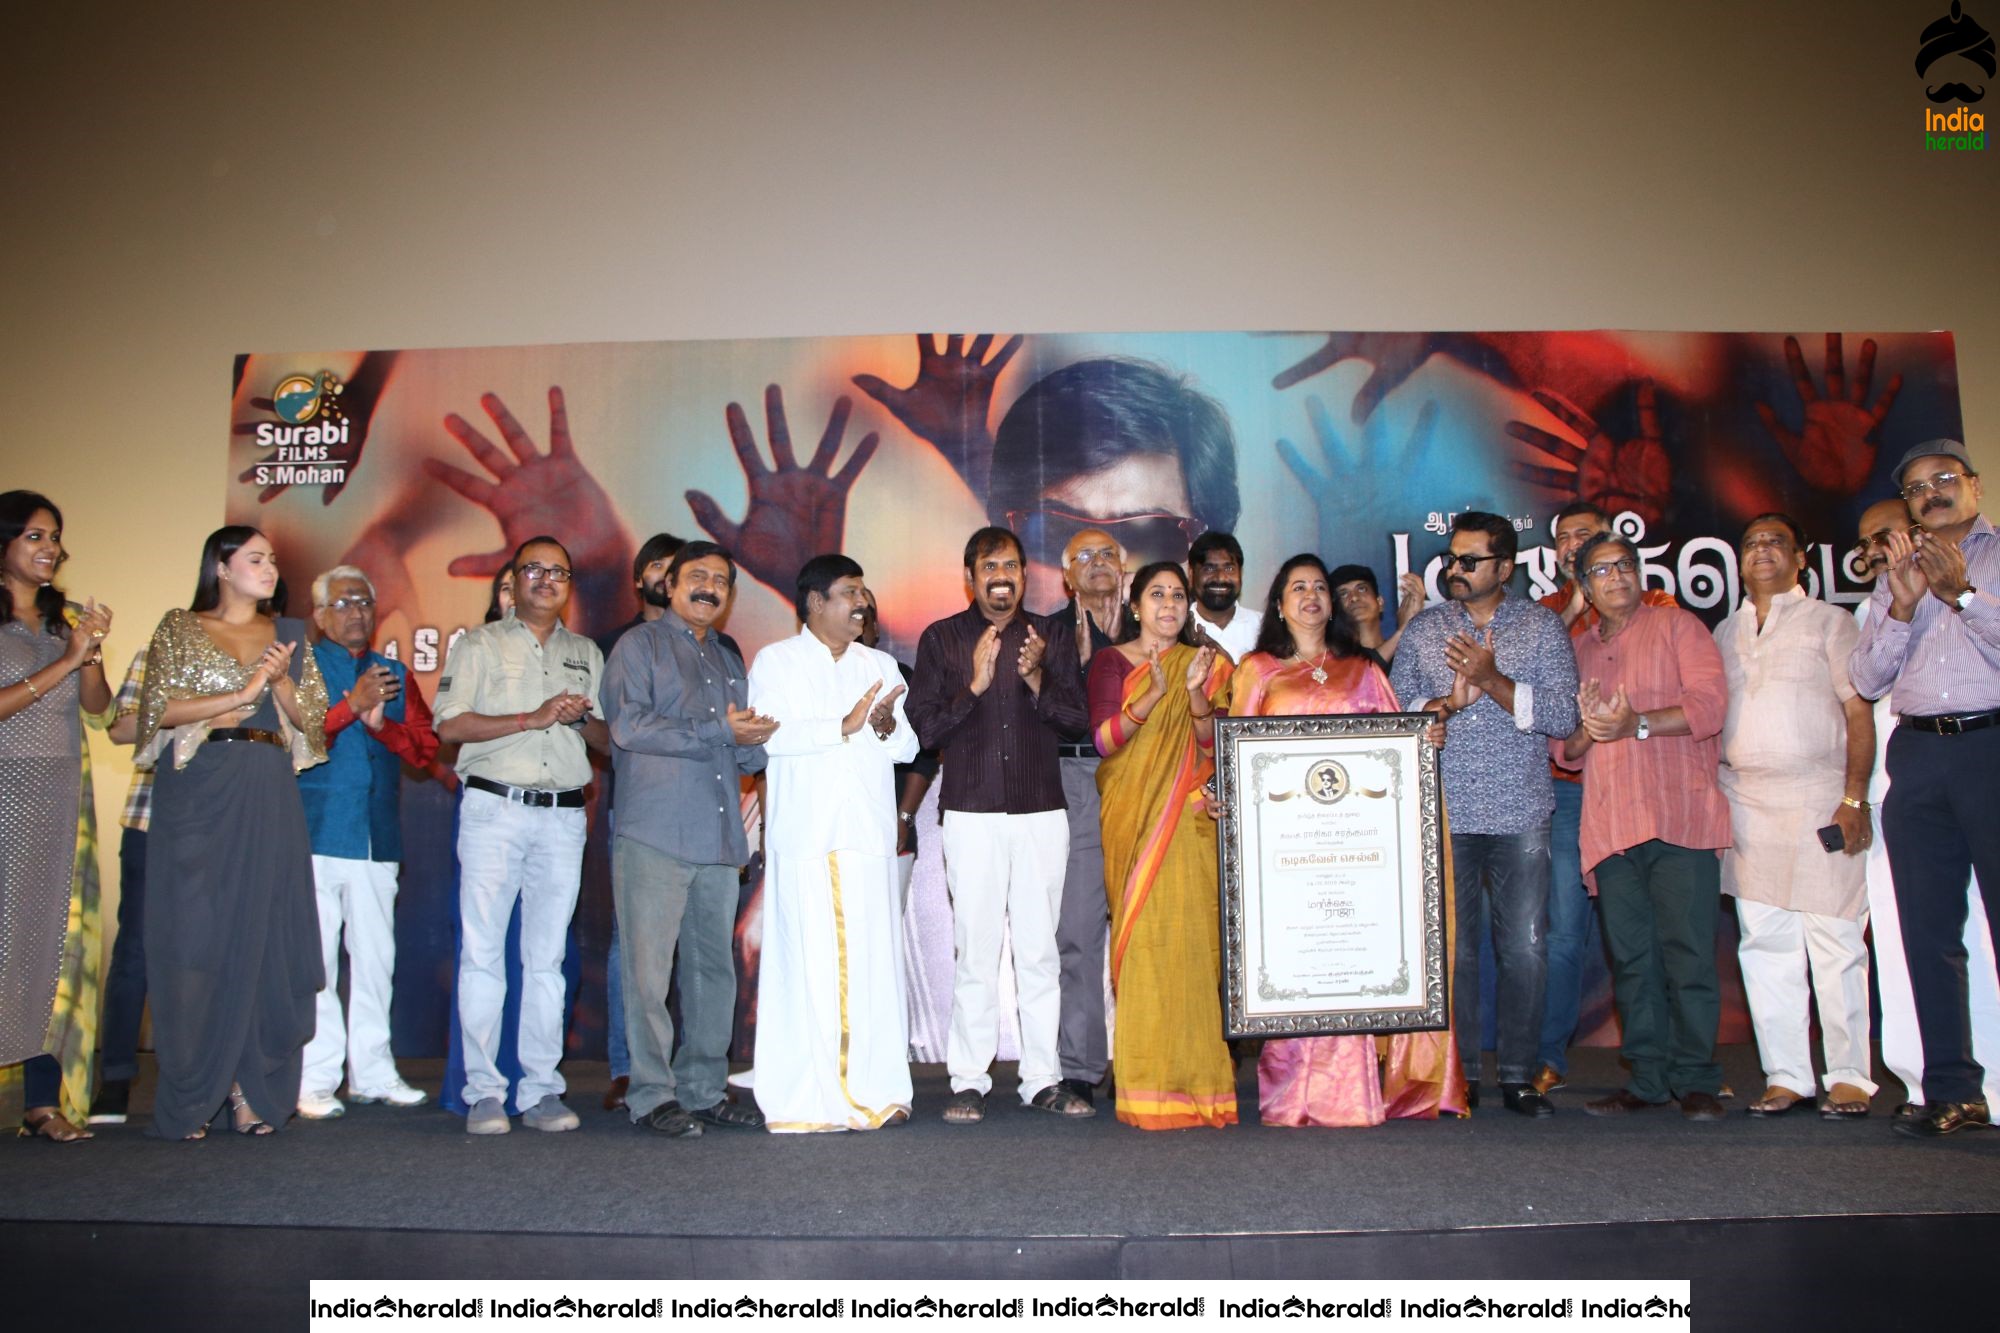 Tamil Movie MarkRaja Audio and Trailer Launch Stills Set 3